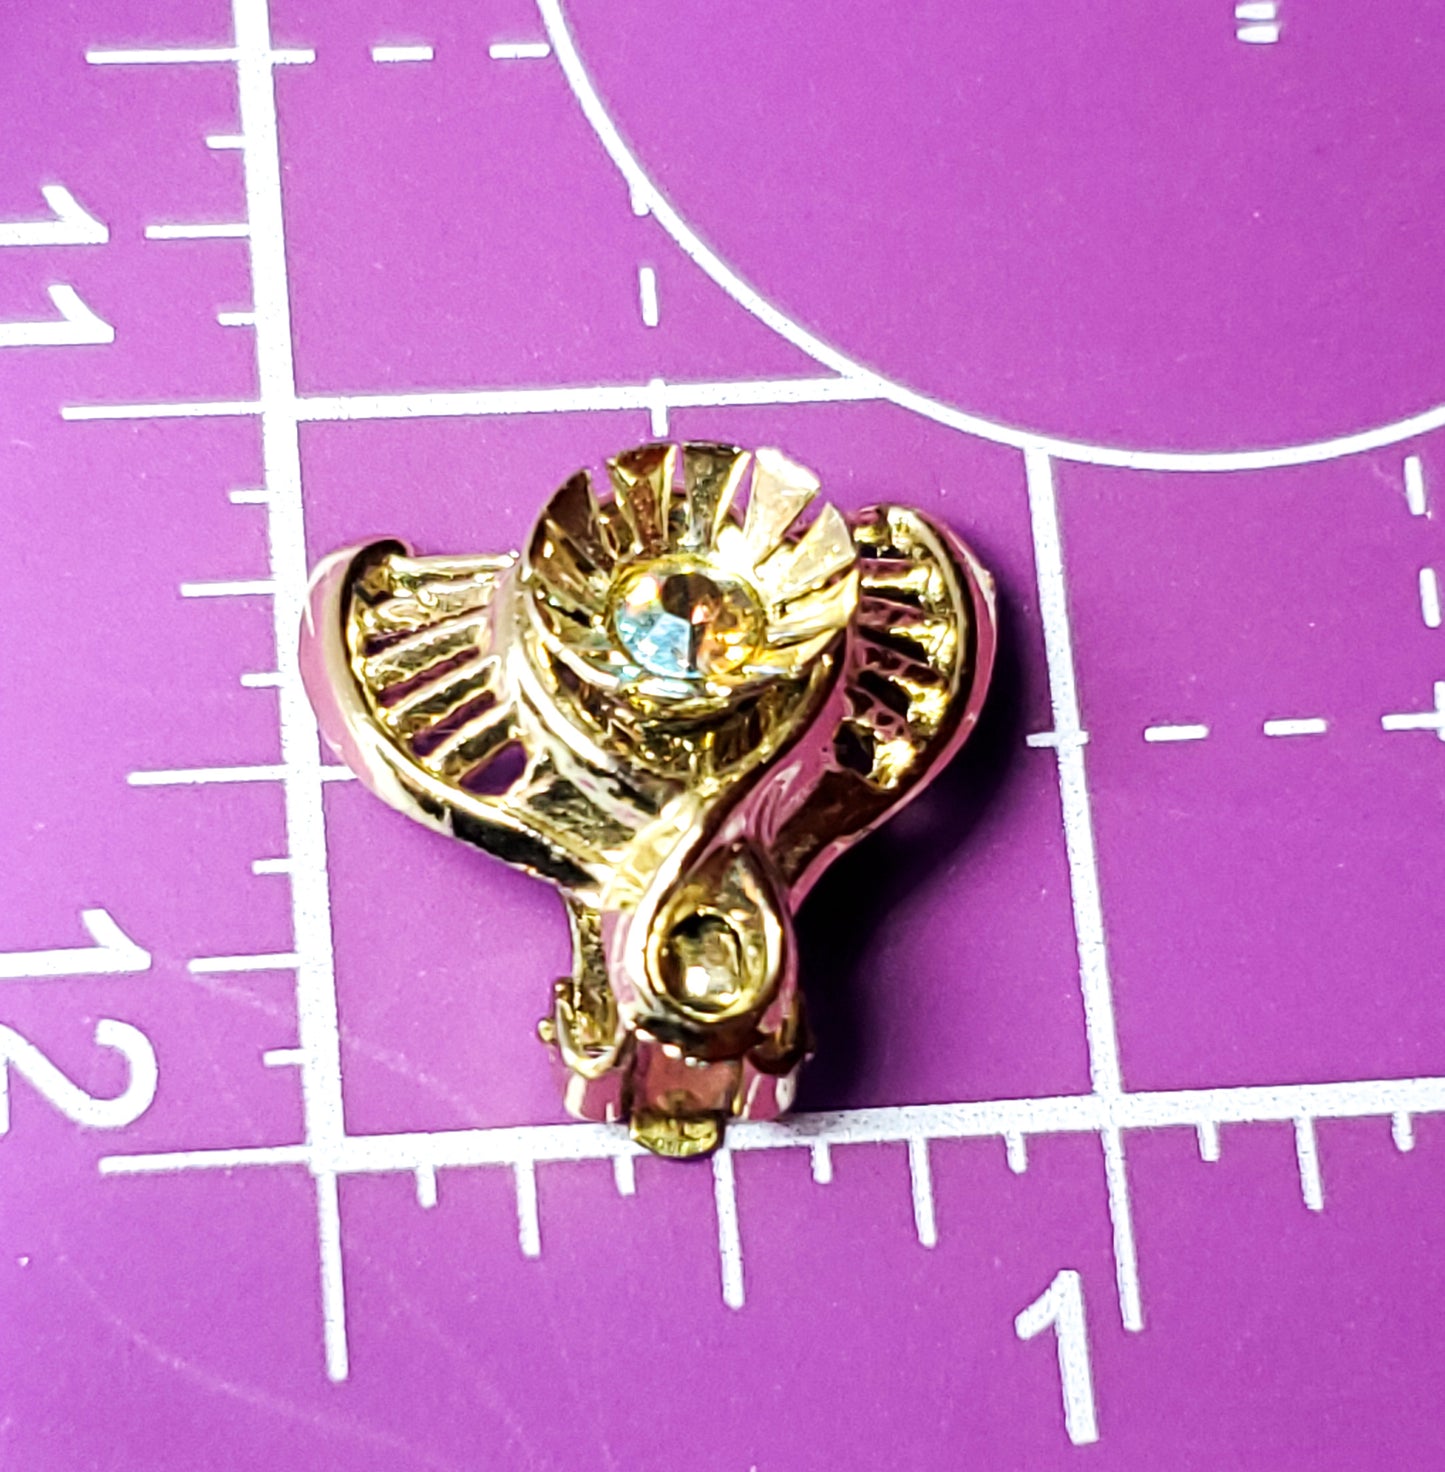 Aurora Borealis gold toned cup vintage rhinestone clip on earrings mid century